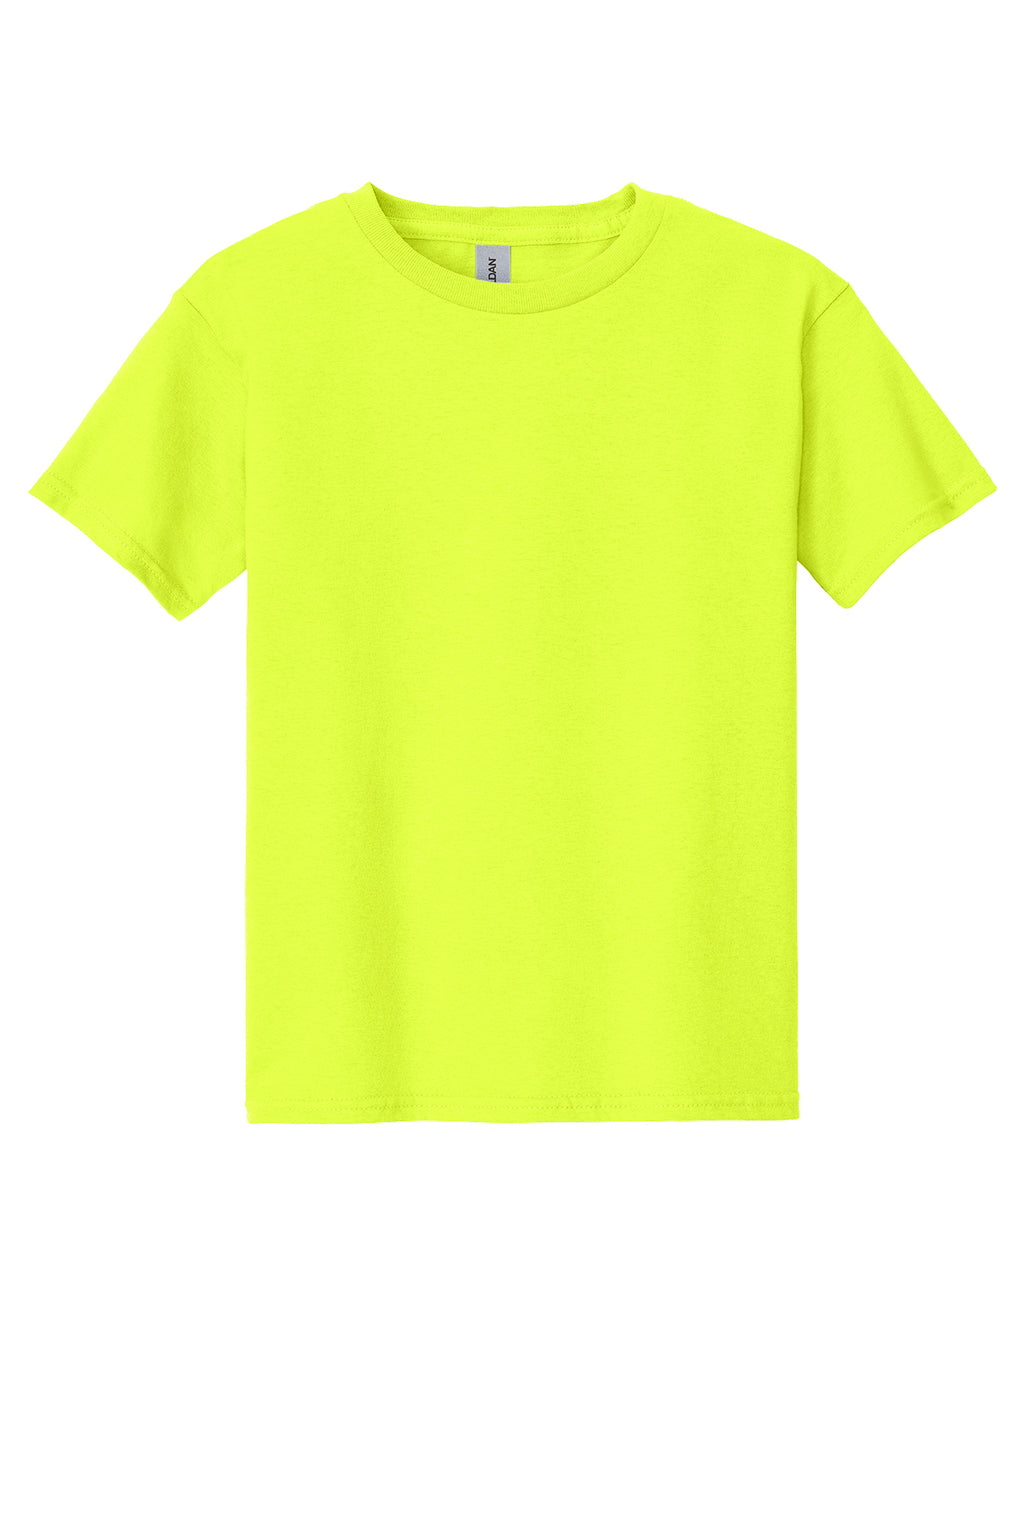 Gildan Youth S/S Shirts Neon yellow